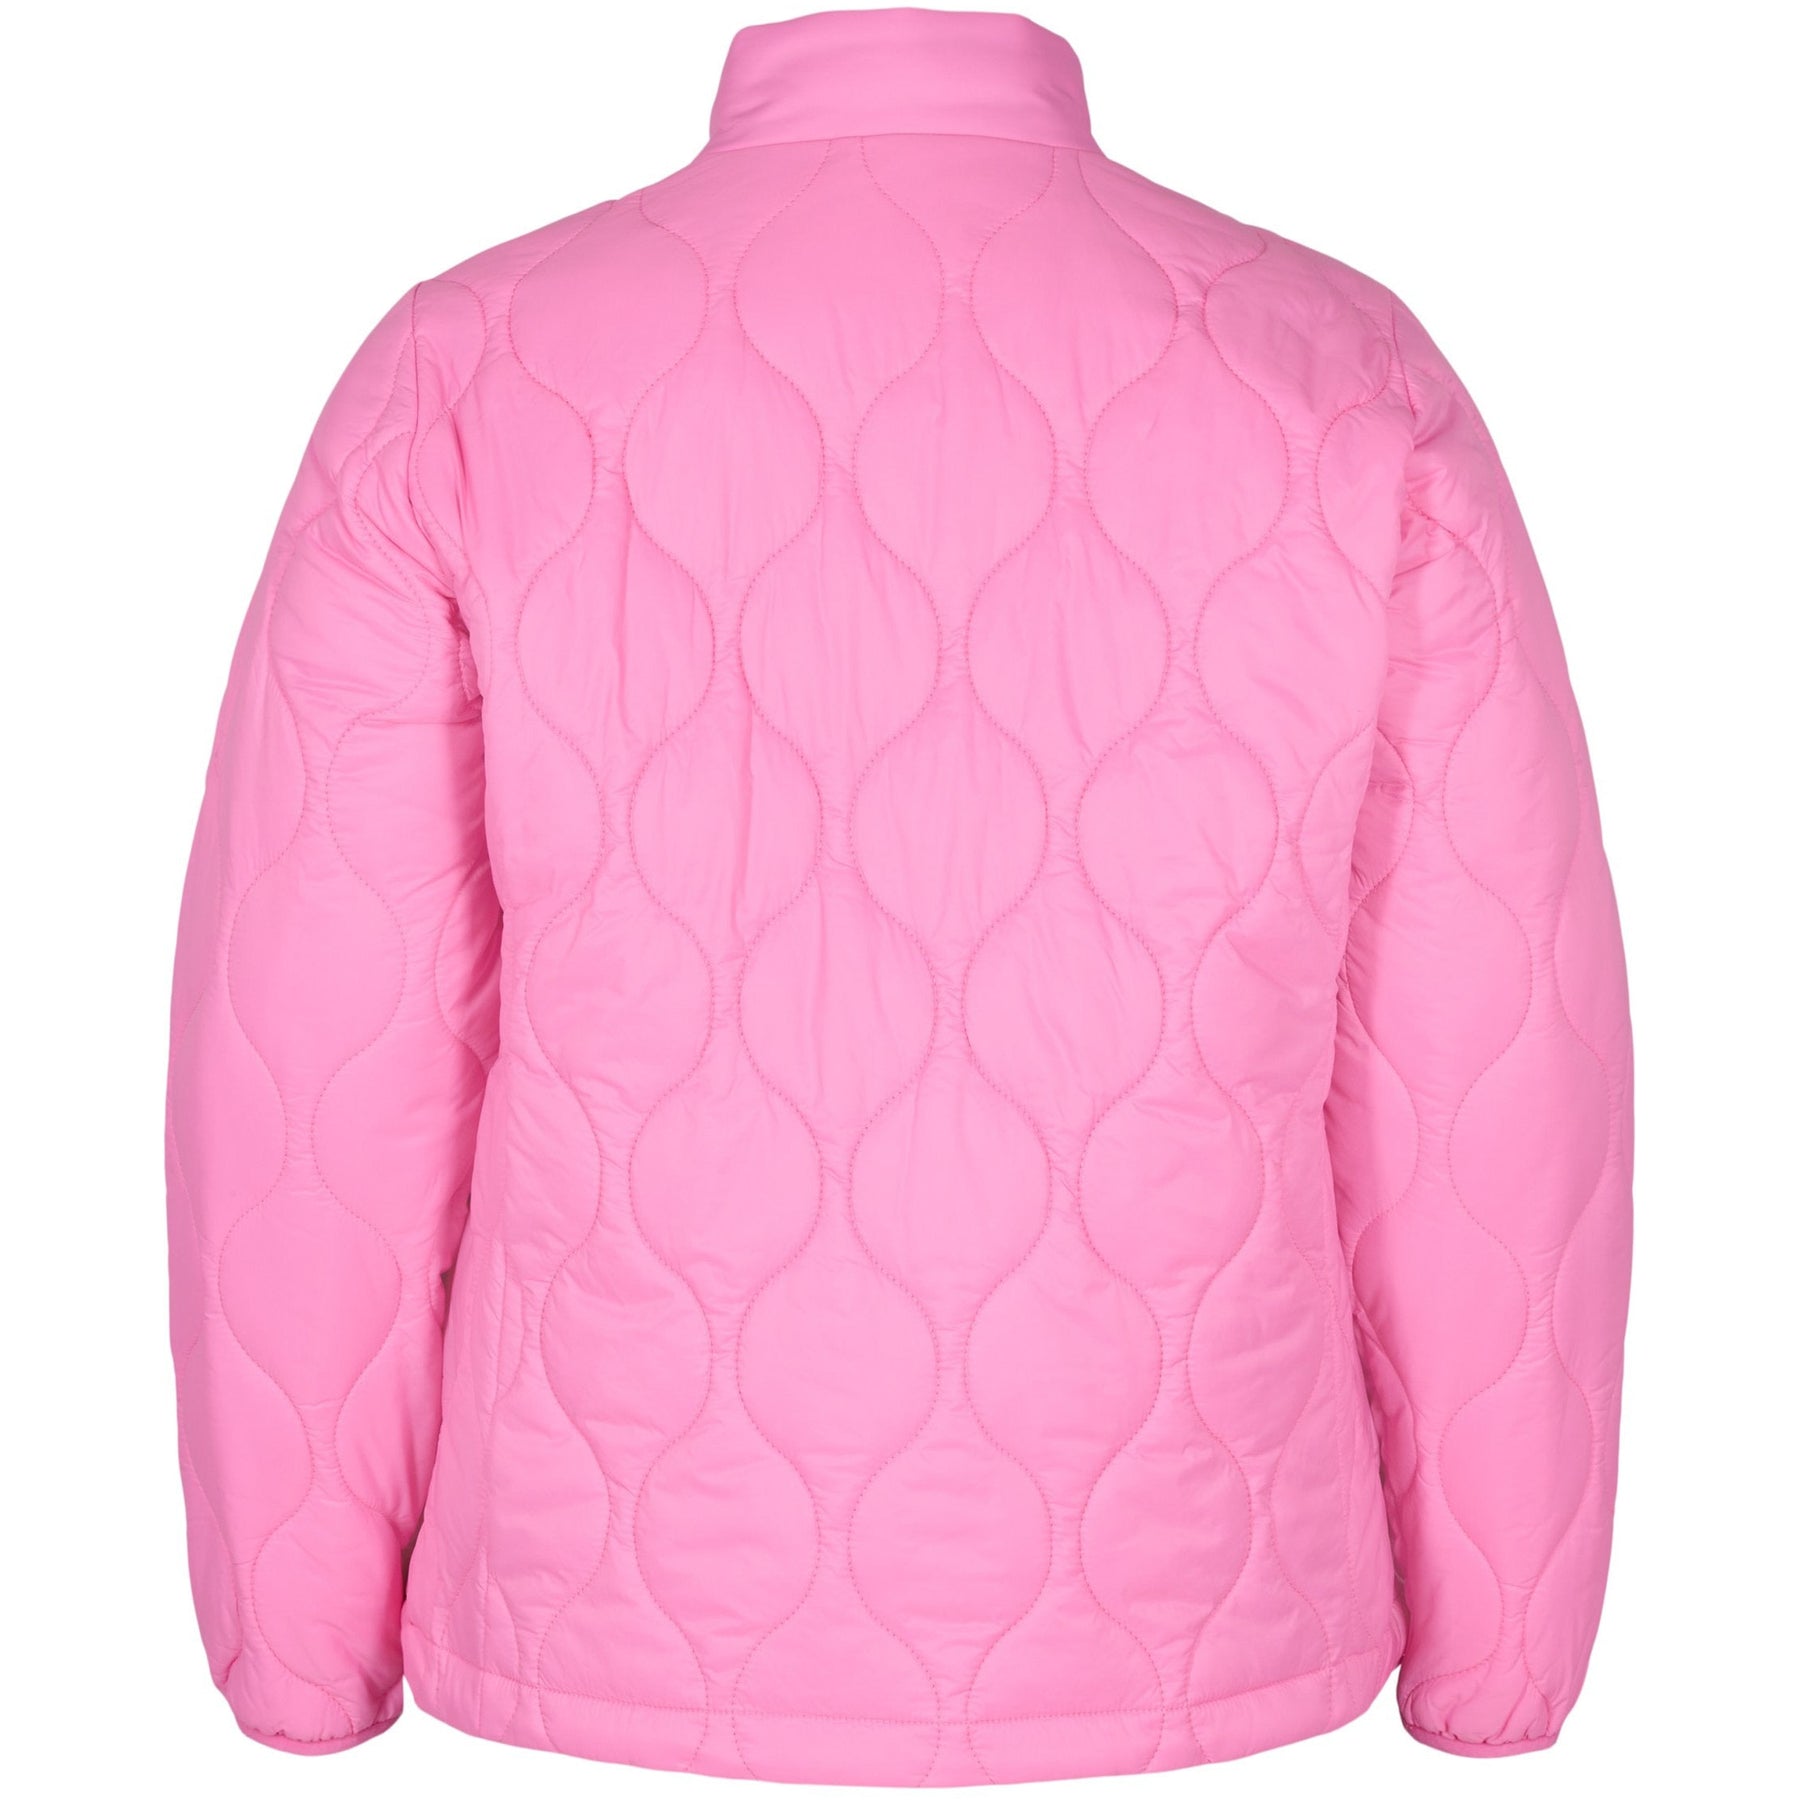 Zizzi Quilted Lightweight Jacket in Pink - Wardrobe Plus